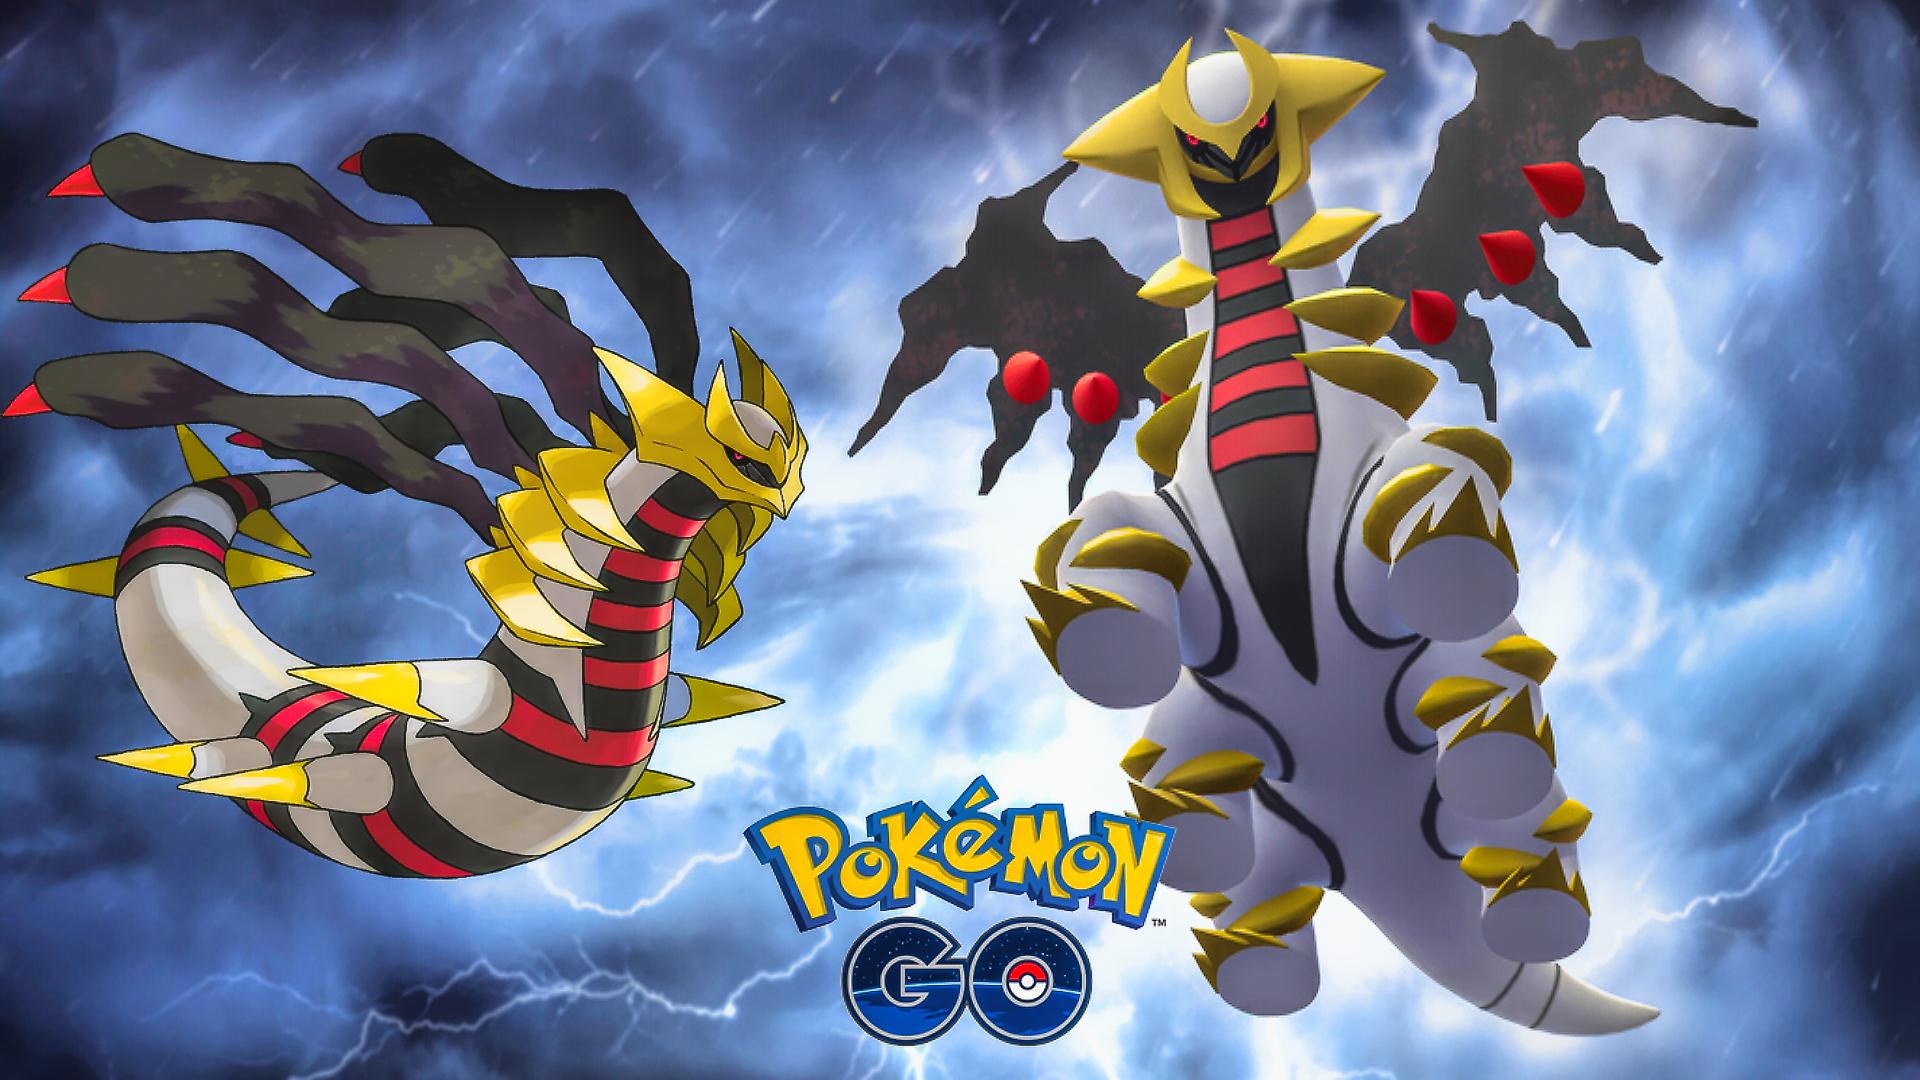 Pokémon Go Legendary Giratina Origin Forme/altered - Pokemon Go Giratina Raid - HD Wallpaper 